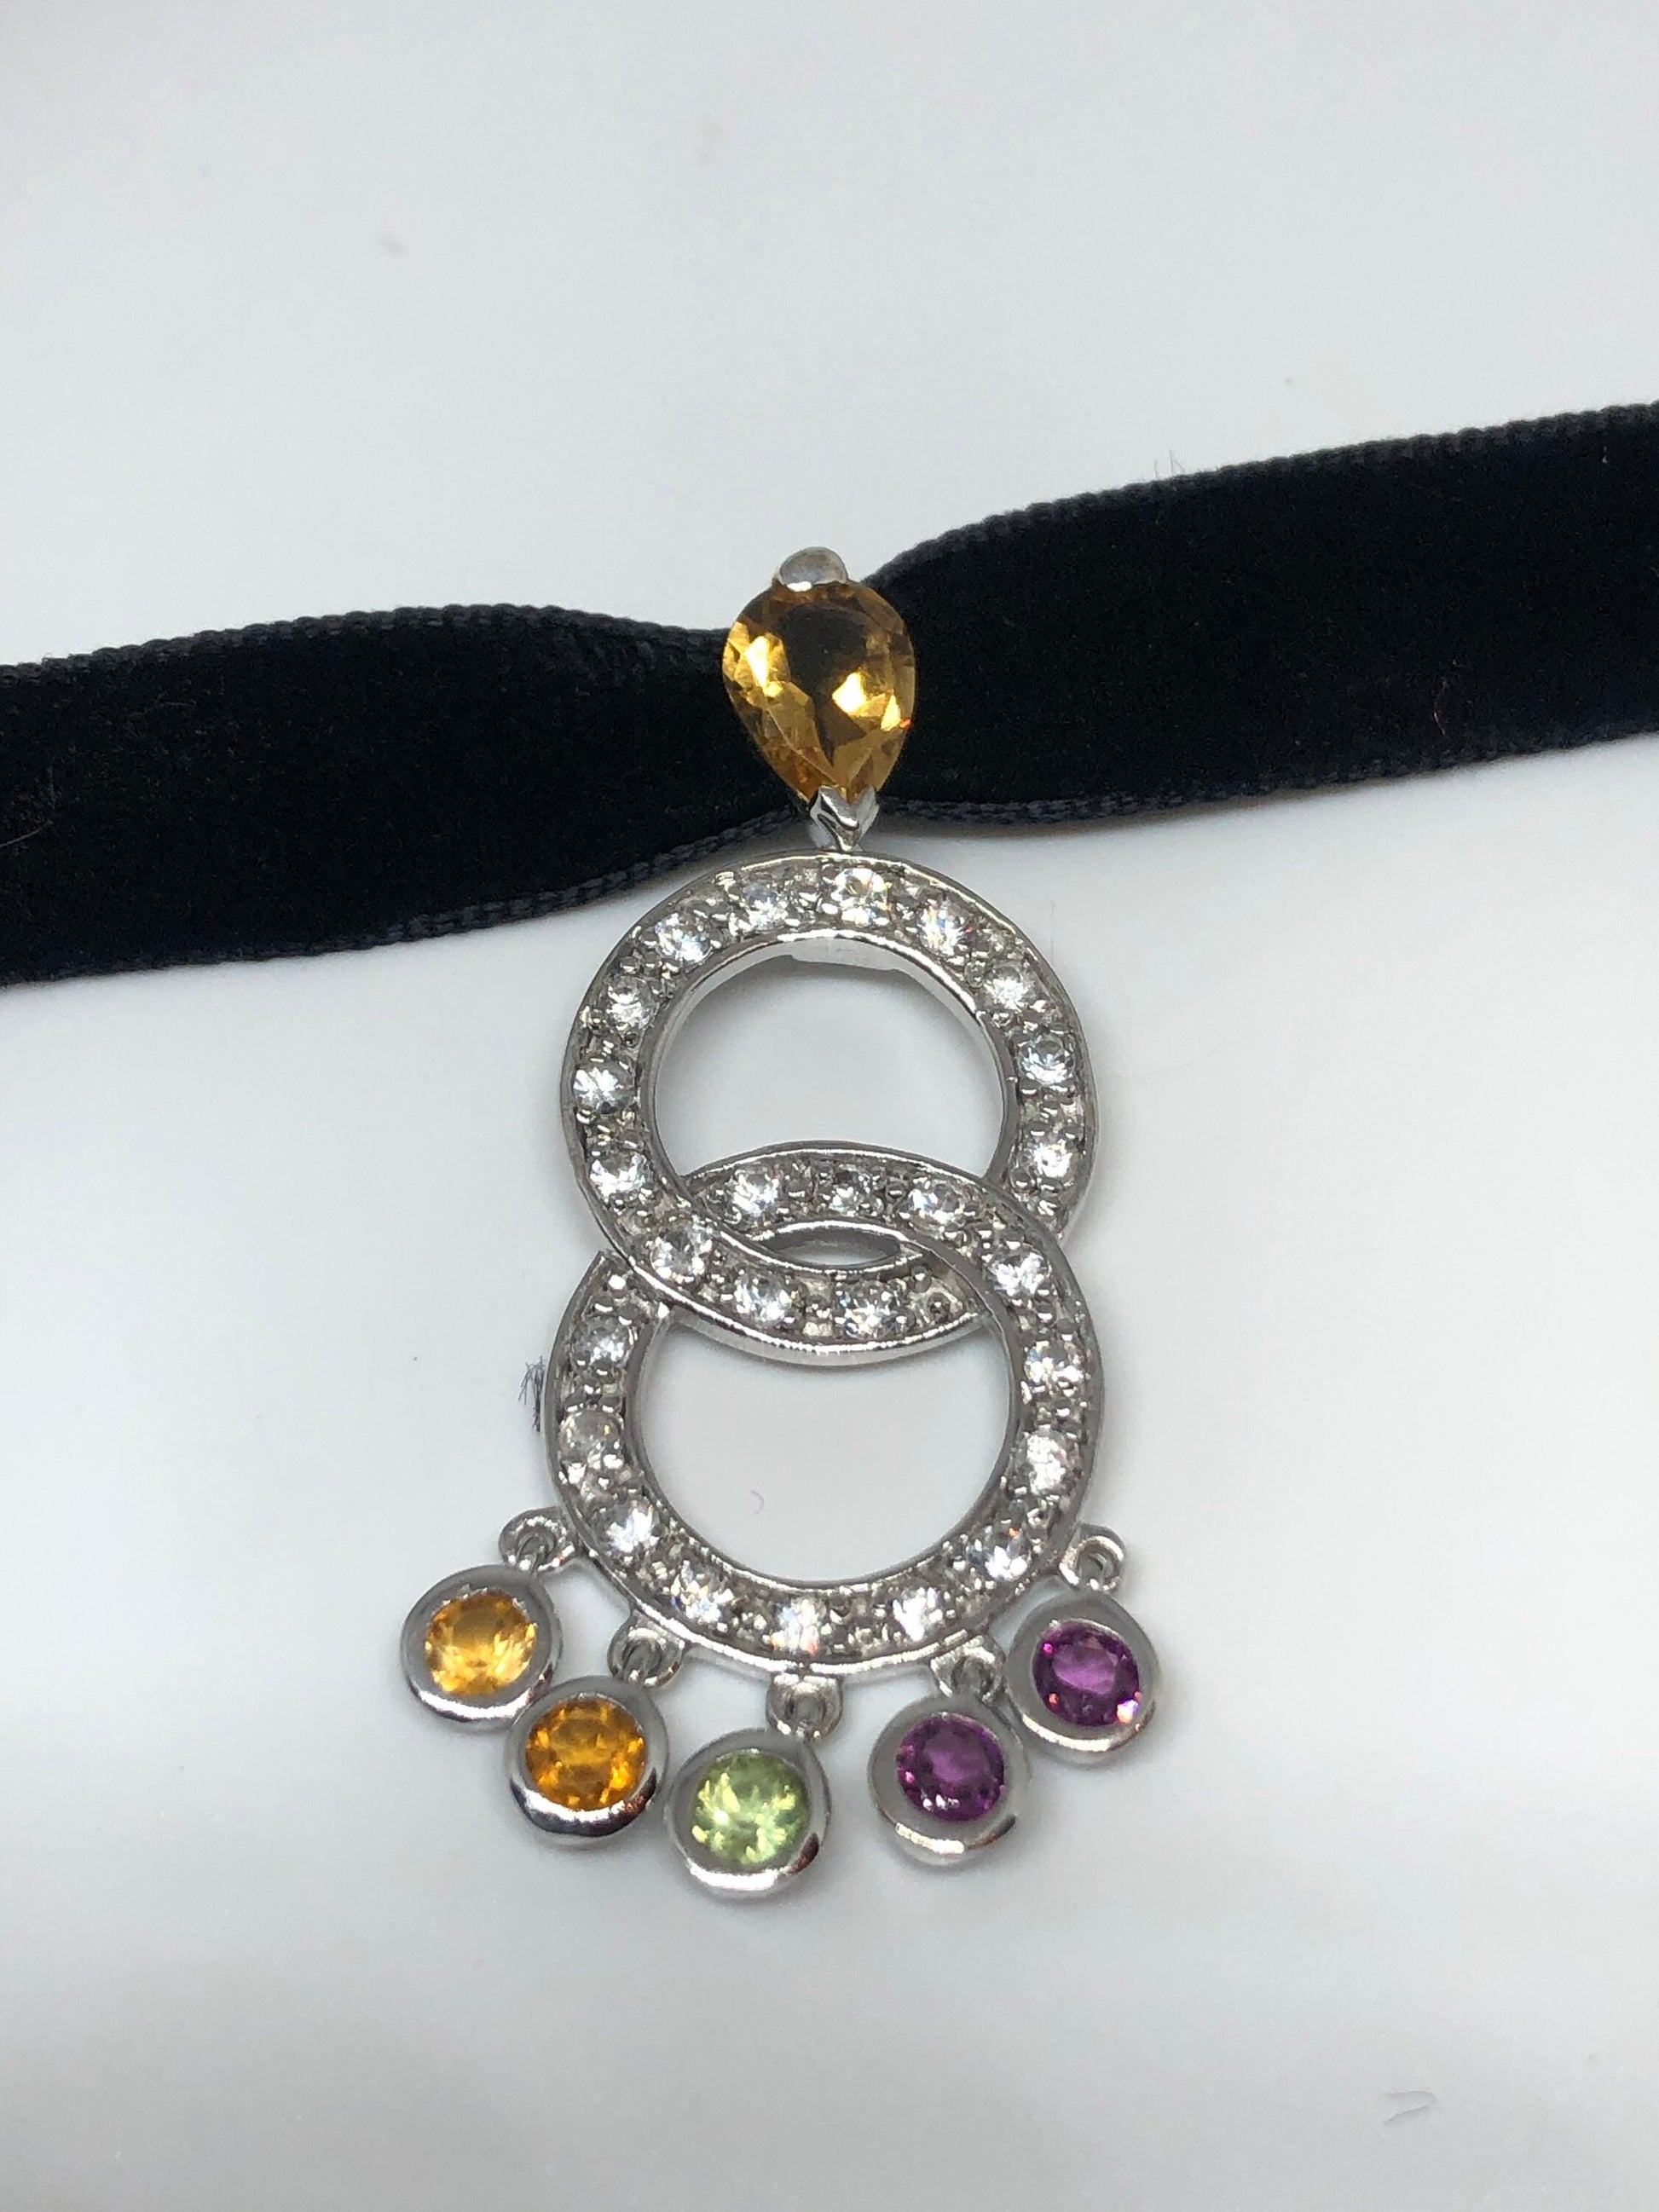 Vintage 925 Sterling Silver Genuine Garnet Mixed Gemstone and Citrine Antique Pendant Necklace